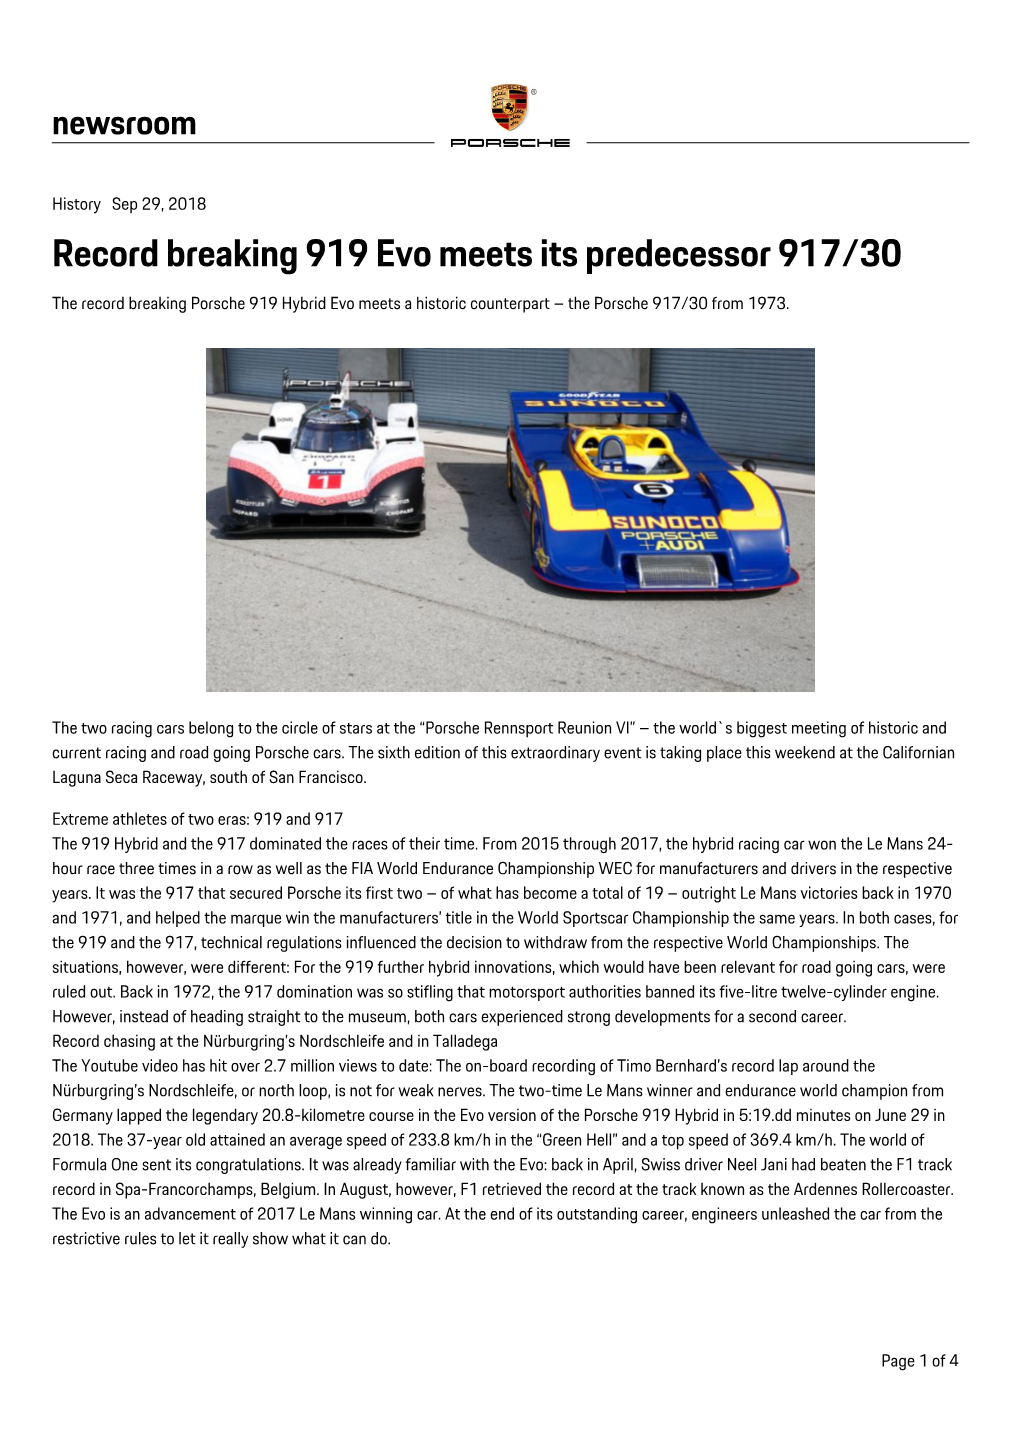 Record Breaking 919 Evo Meets Its Predecessor 917/30 the Record Breaking Porsche 919 Hybrid Evo Meets a Historic Counterpart – the Porsche 917/30 from 1973